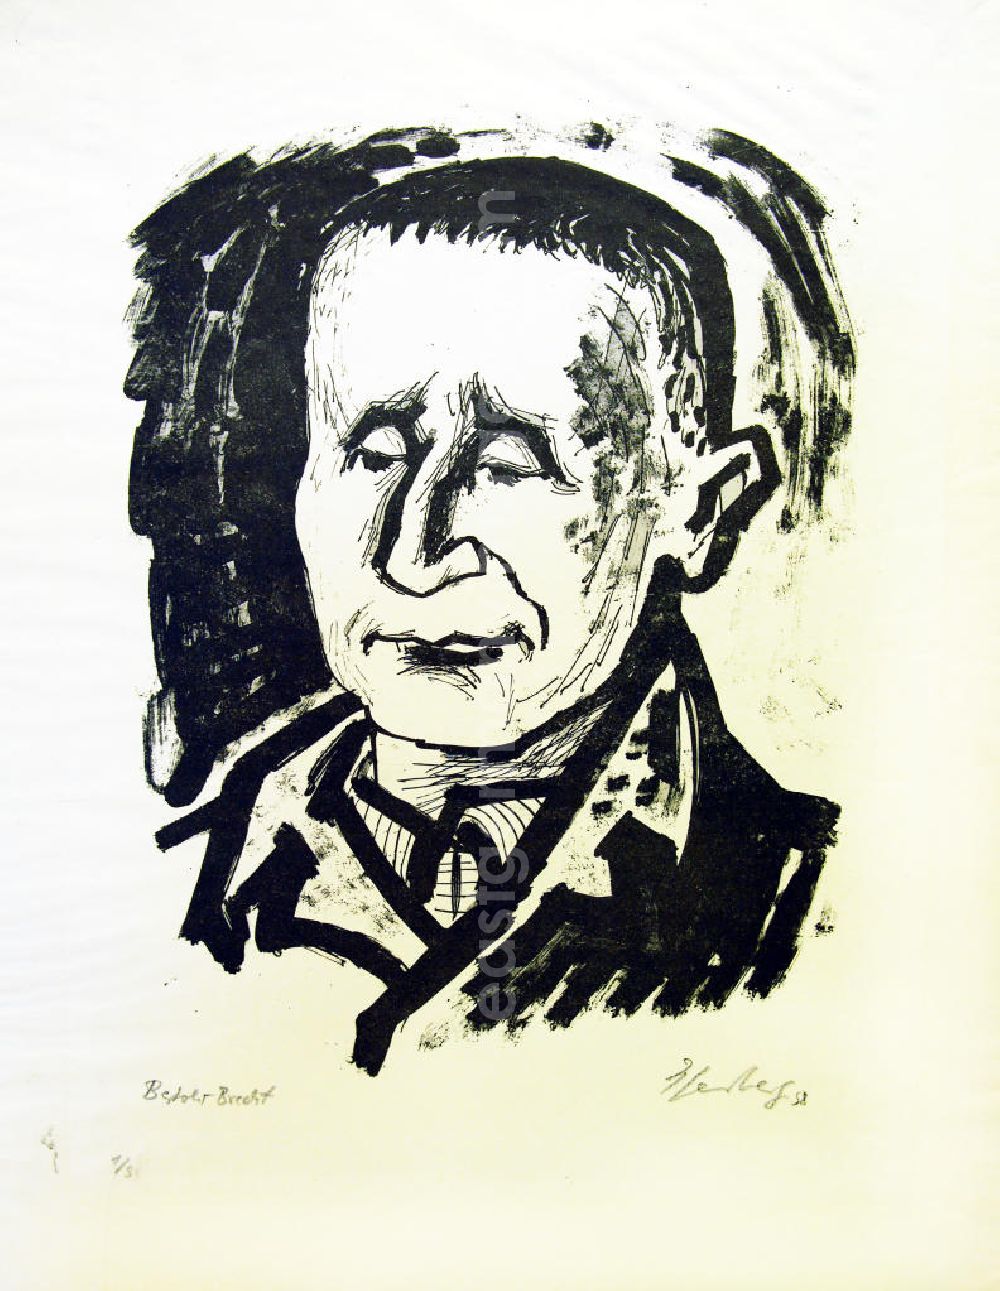 GDR image archive: Berlin - Grafik von Herbert Sandberg Bertolt Brecht (Porträt rechts) aus dem Jahr 1958, 27,5x37,